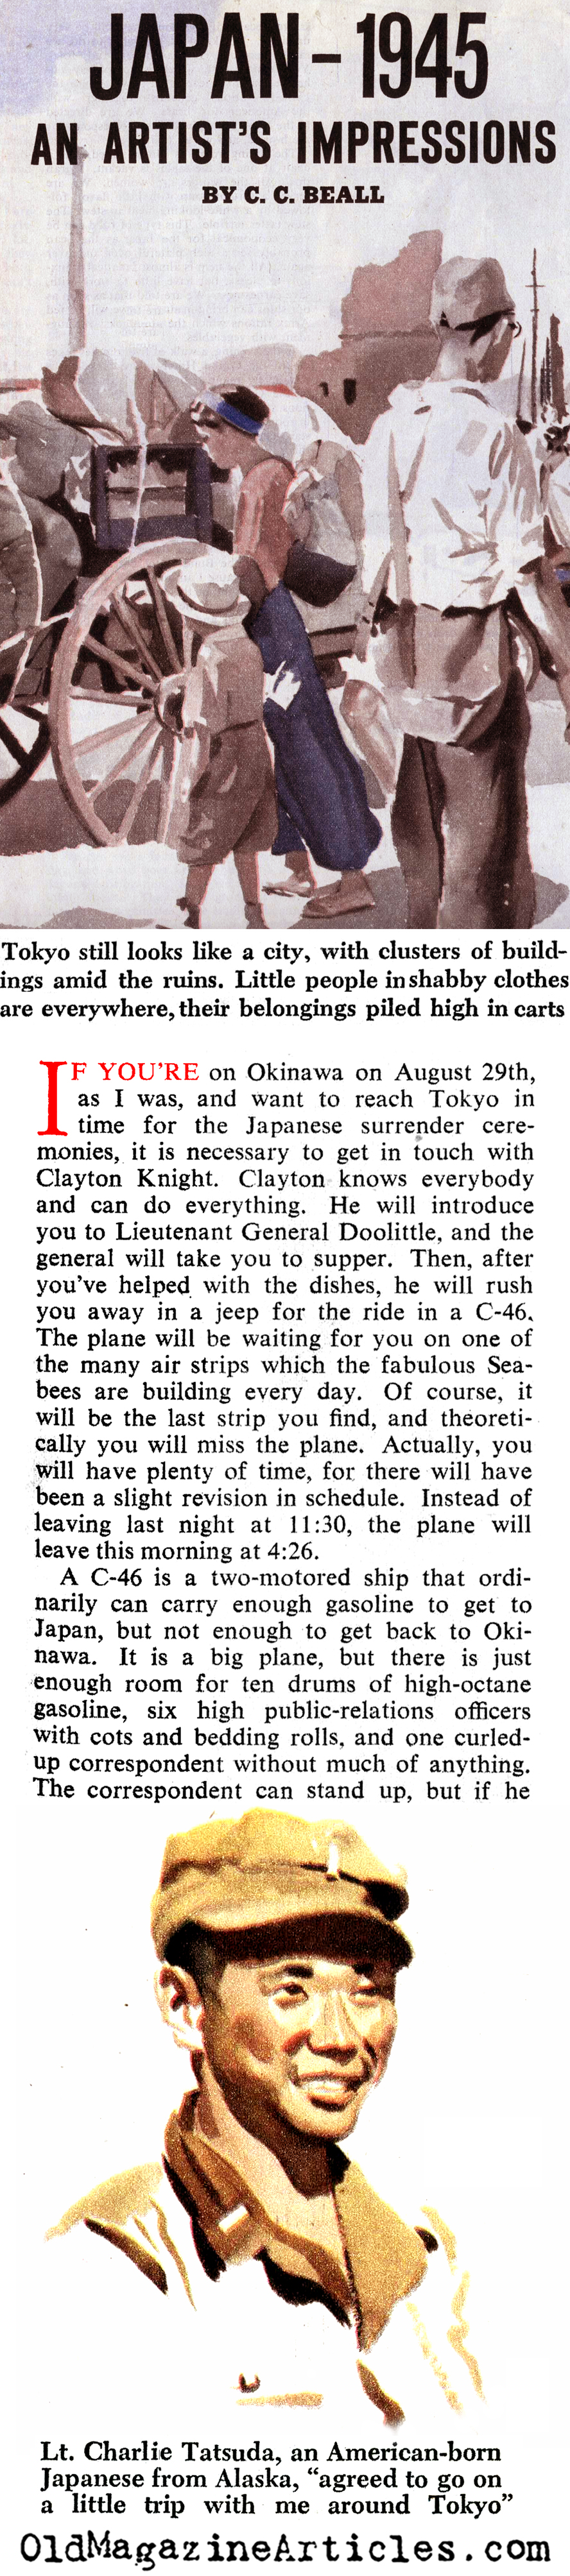 Impressions of Tokyo (Collier's Magazine, 1945)